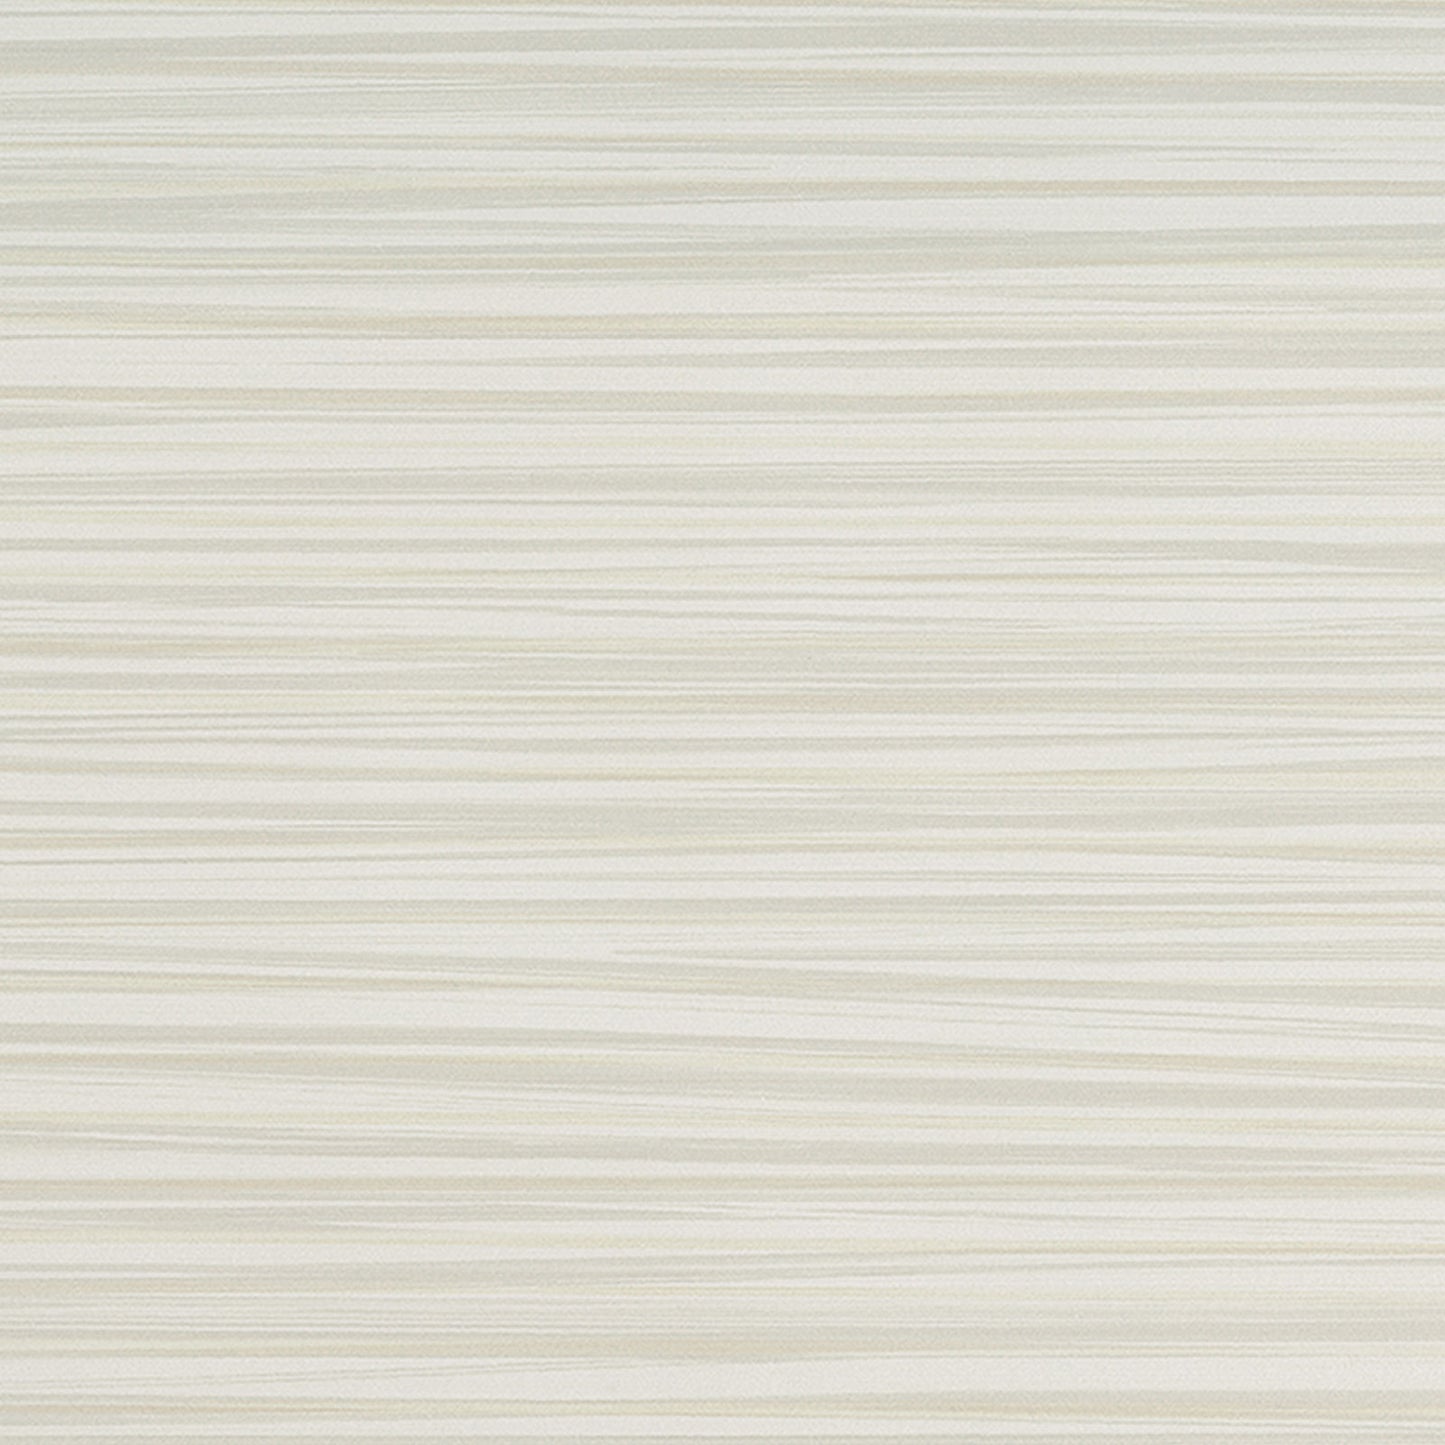 Stacy Garcia Moderne New Horizons Wallpaper - White